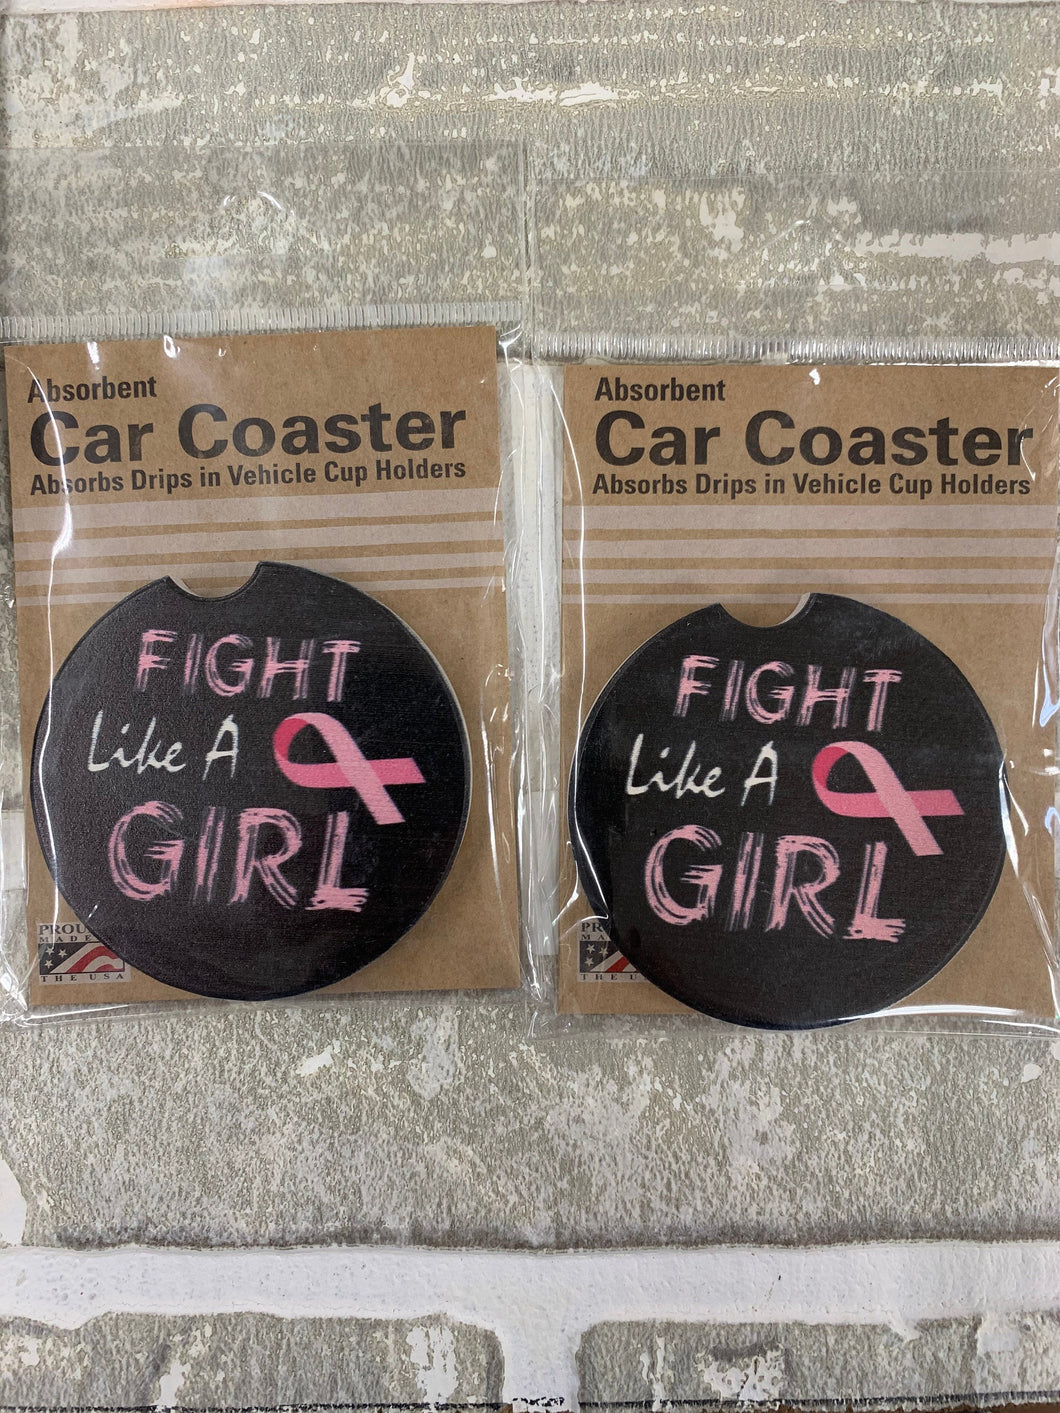 Fight like a girl car coaster